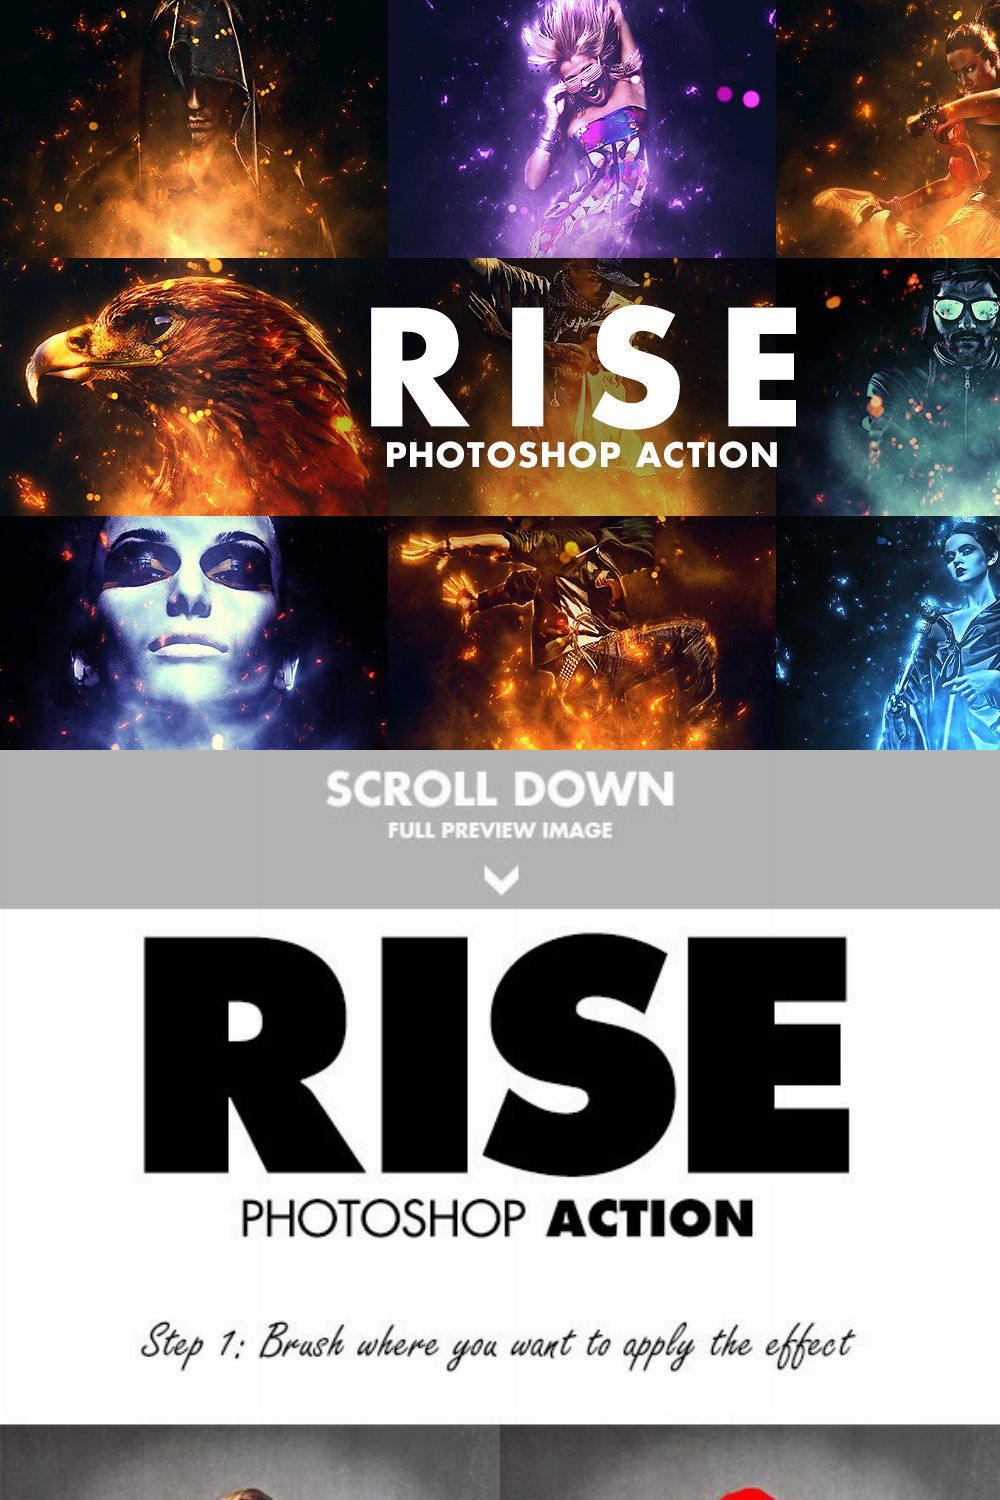 Rise Photoshop Action pinterest preview image.